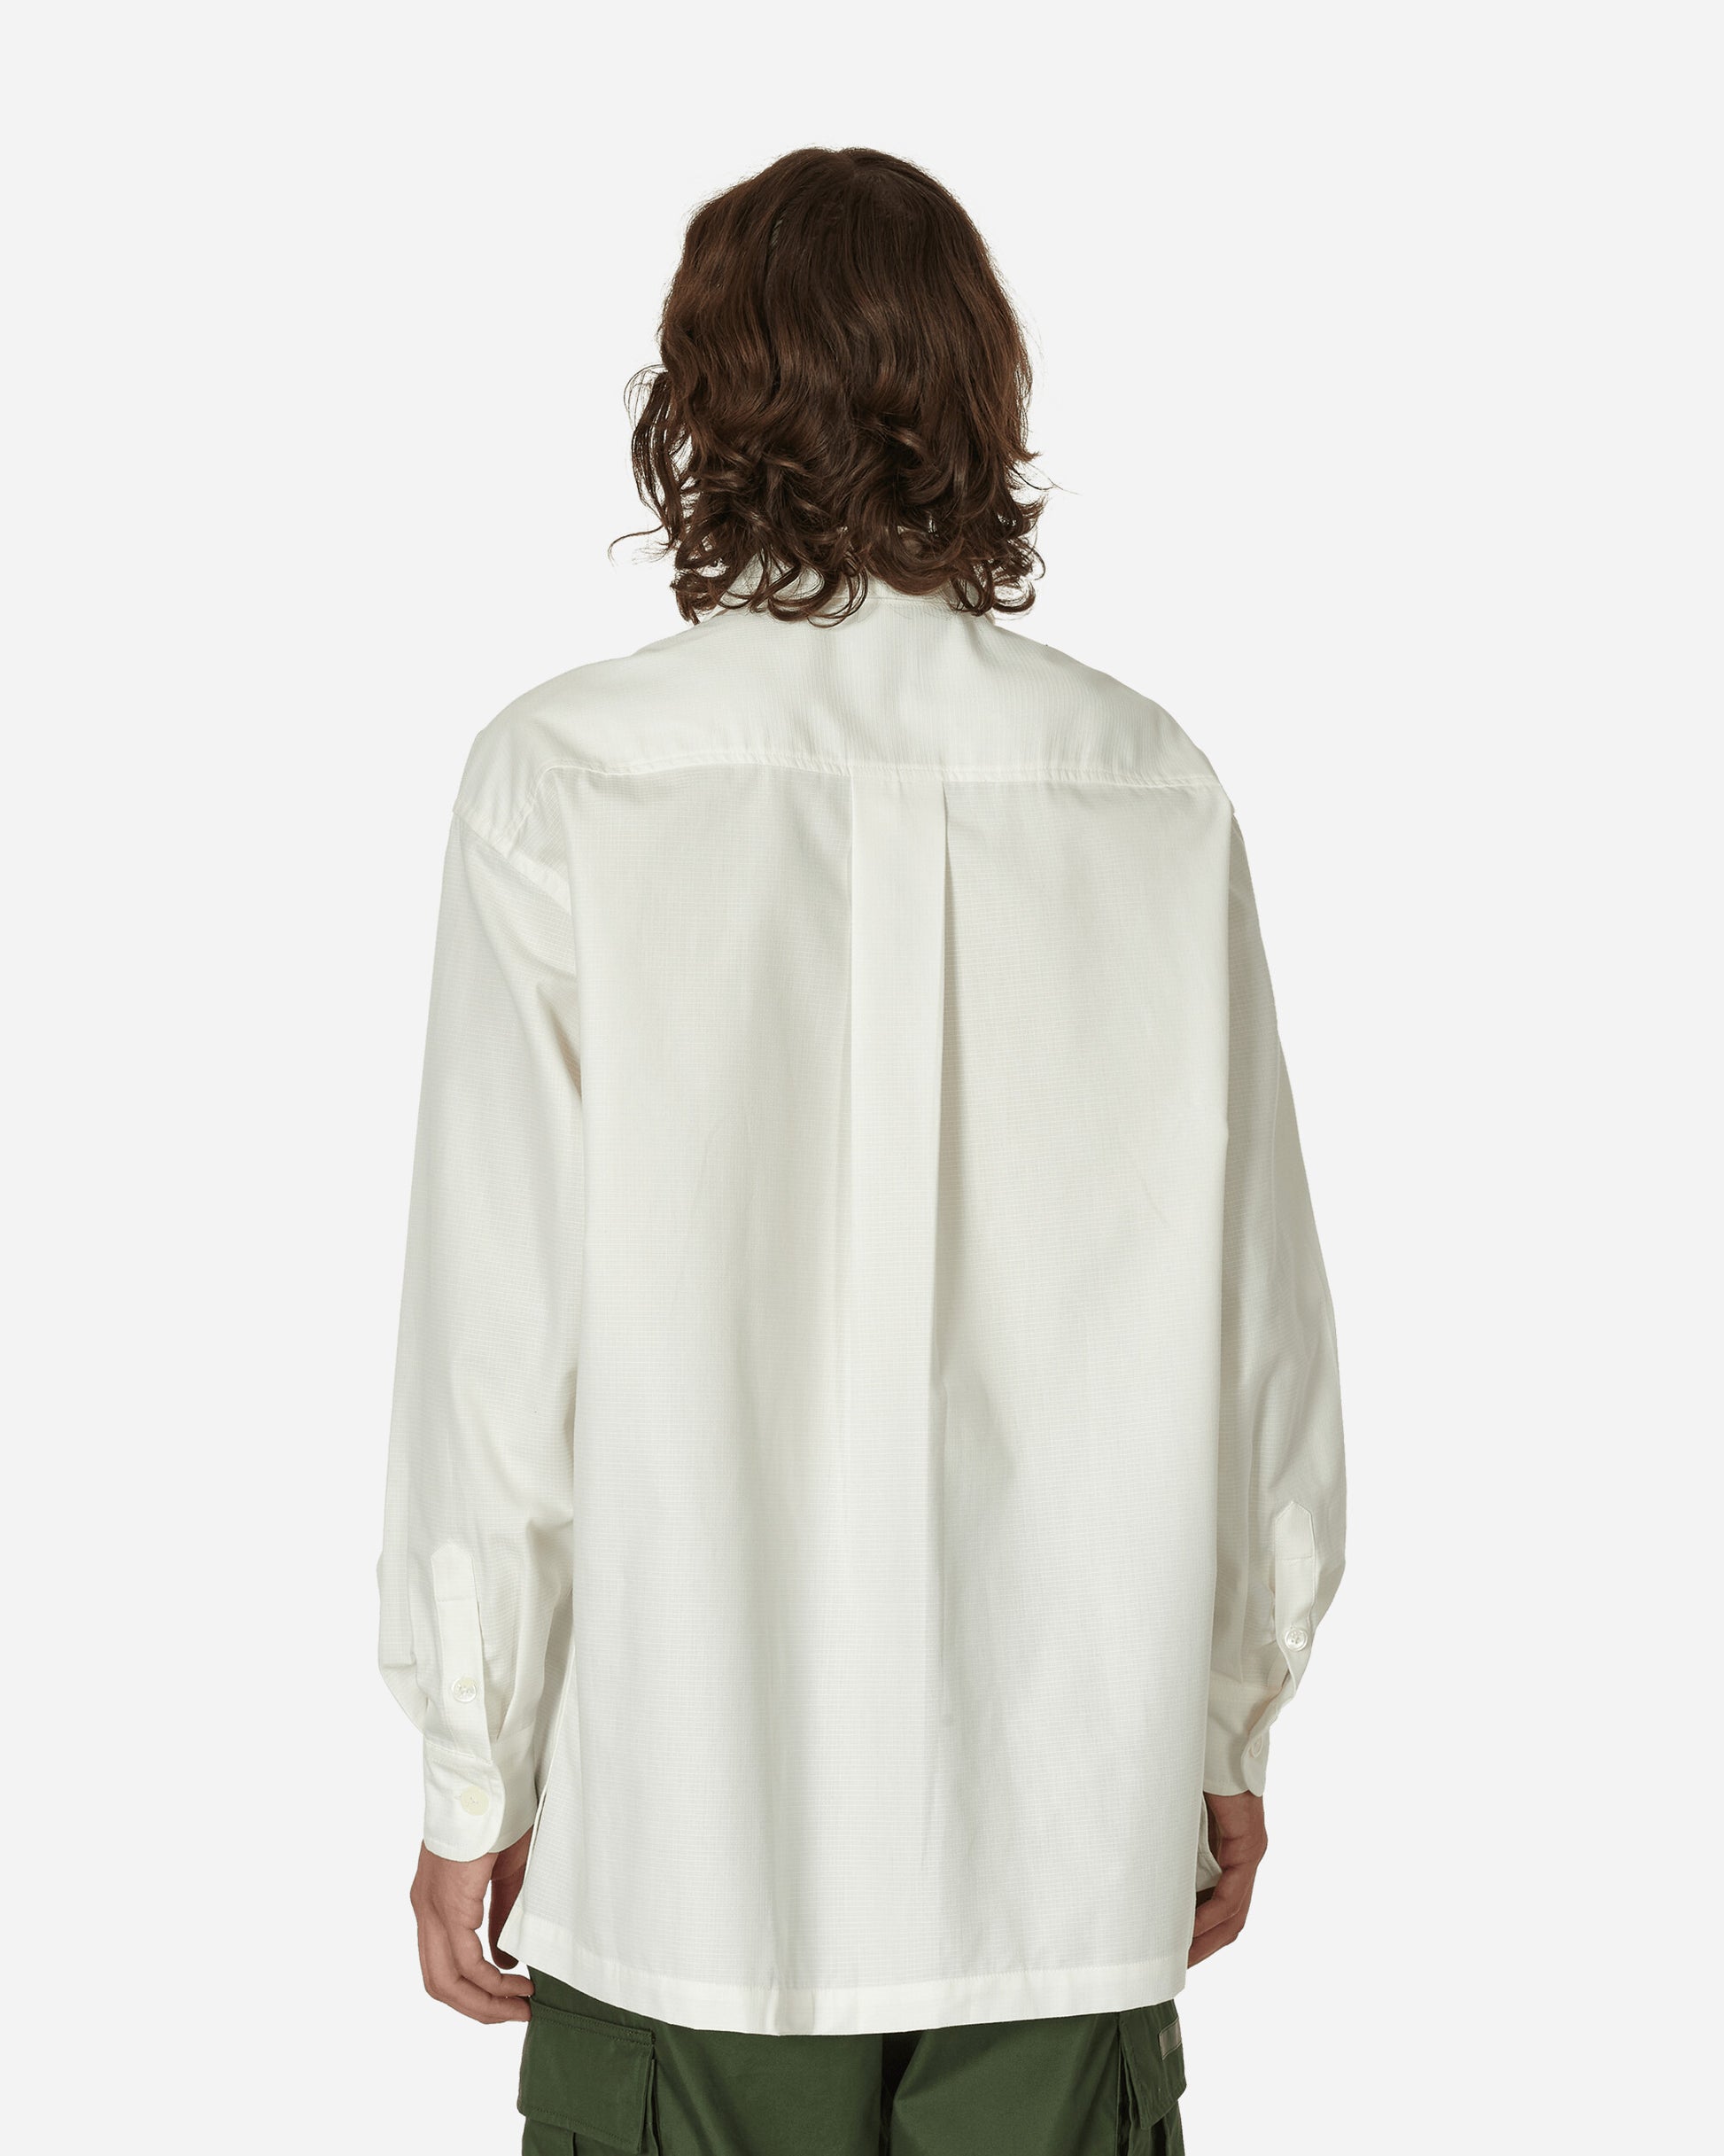 KENZO Paris Boke Crest Oversized Shirt Off White Shirts Longsleeve Shirt FD65CH5079LA 02